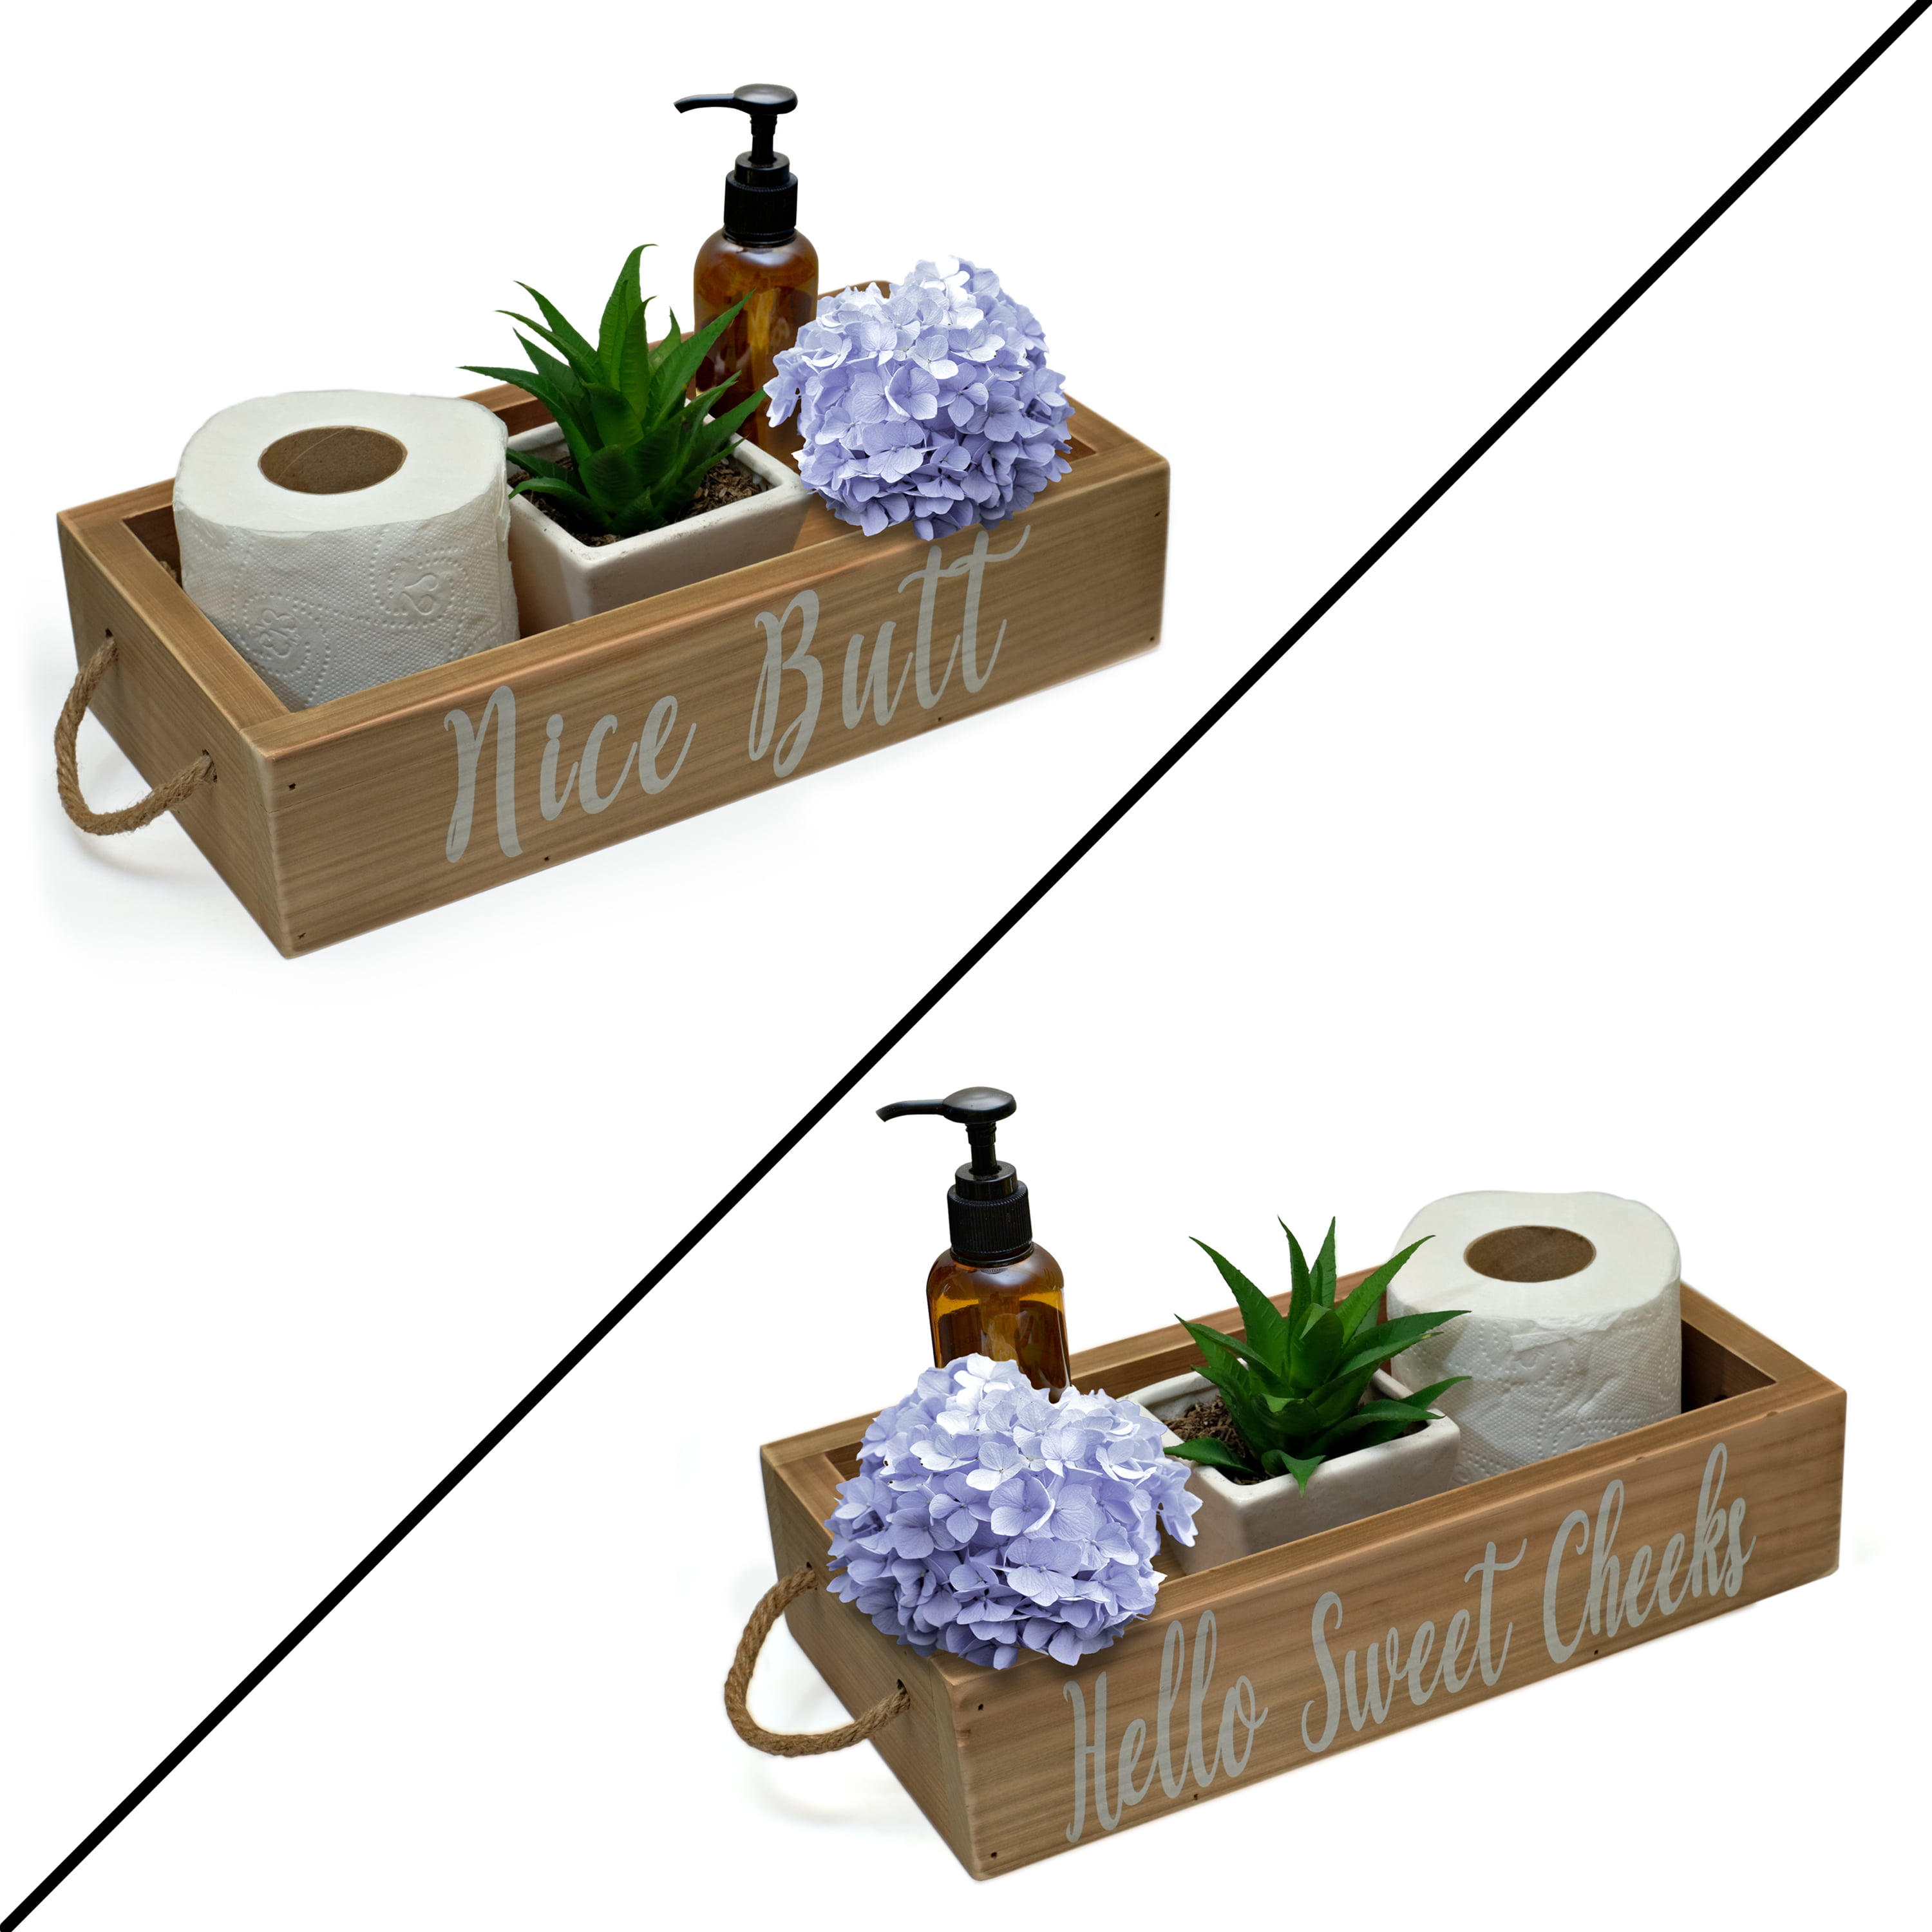 Jar Color Choose Your Box Color Bathroom Humor Toilet Tray Hello Sweet Cheeks Bathroom Box and Flower Color. 